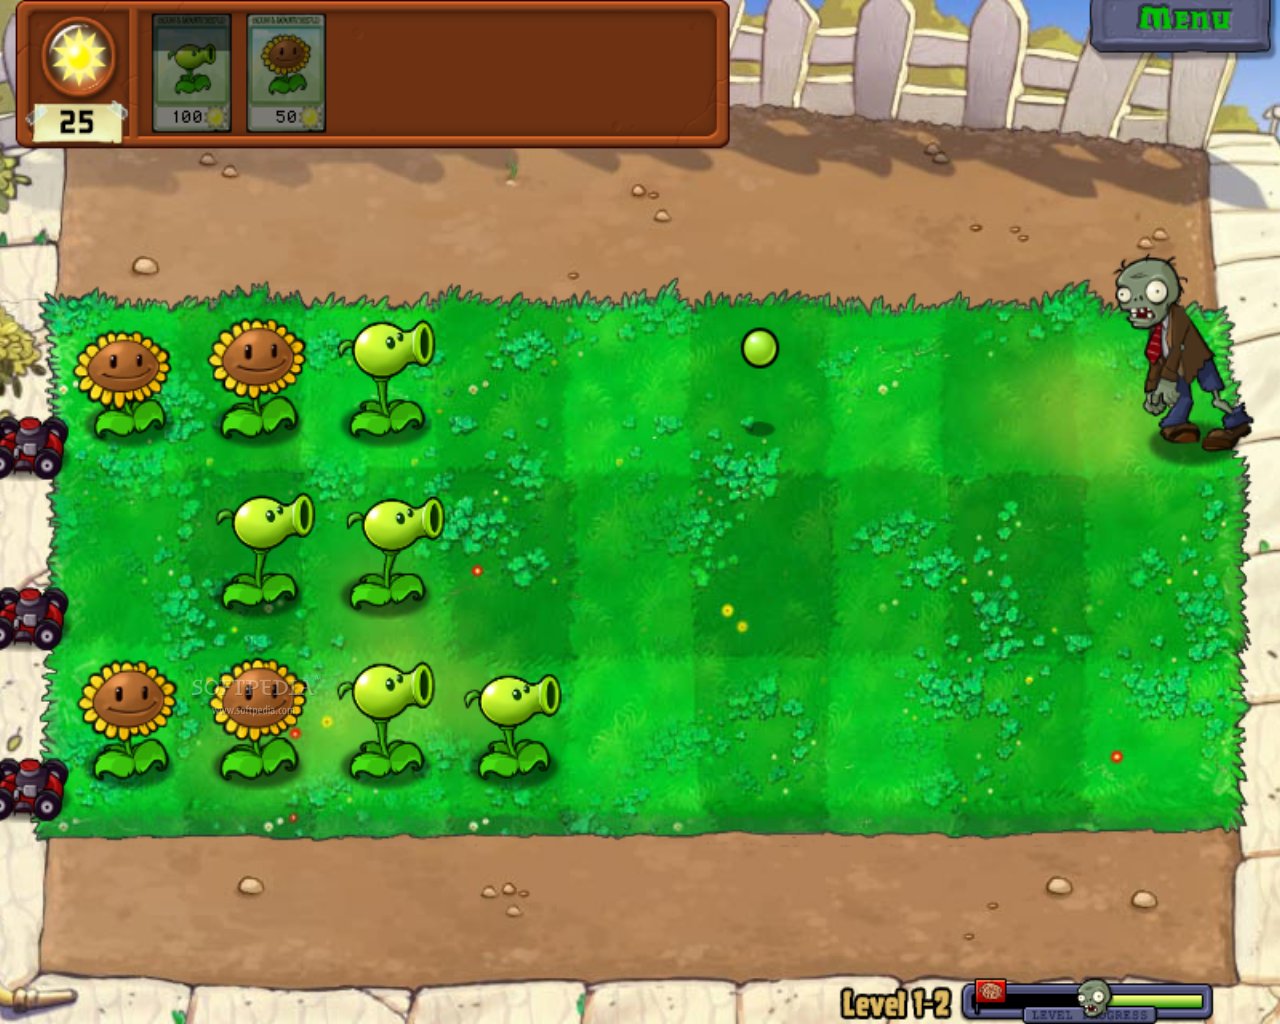 Plants vs Zombies +7 Trainer Download